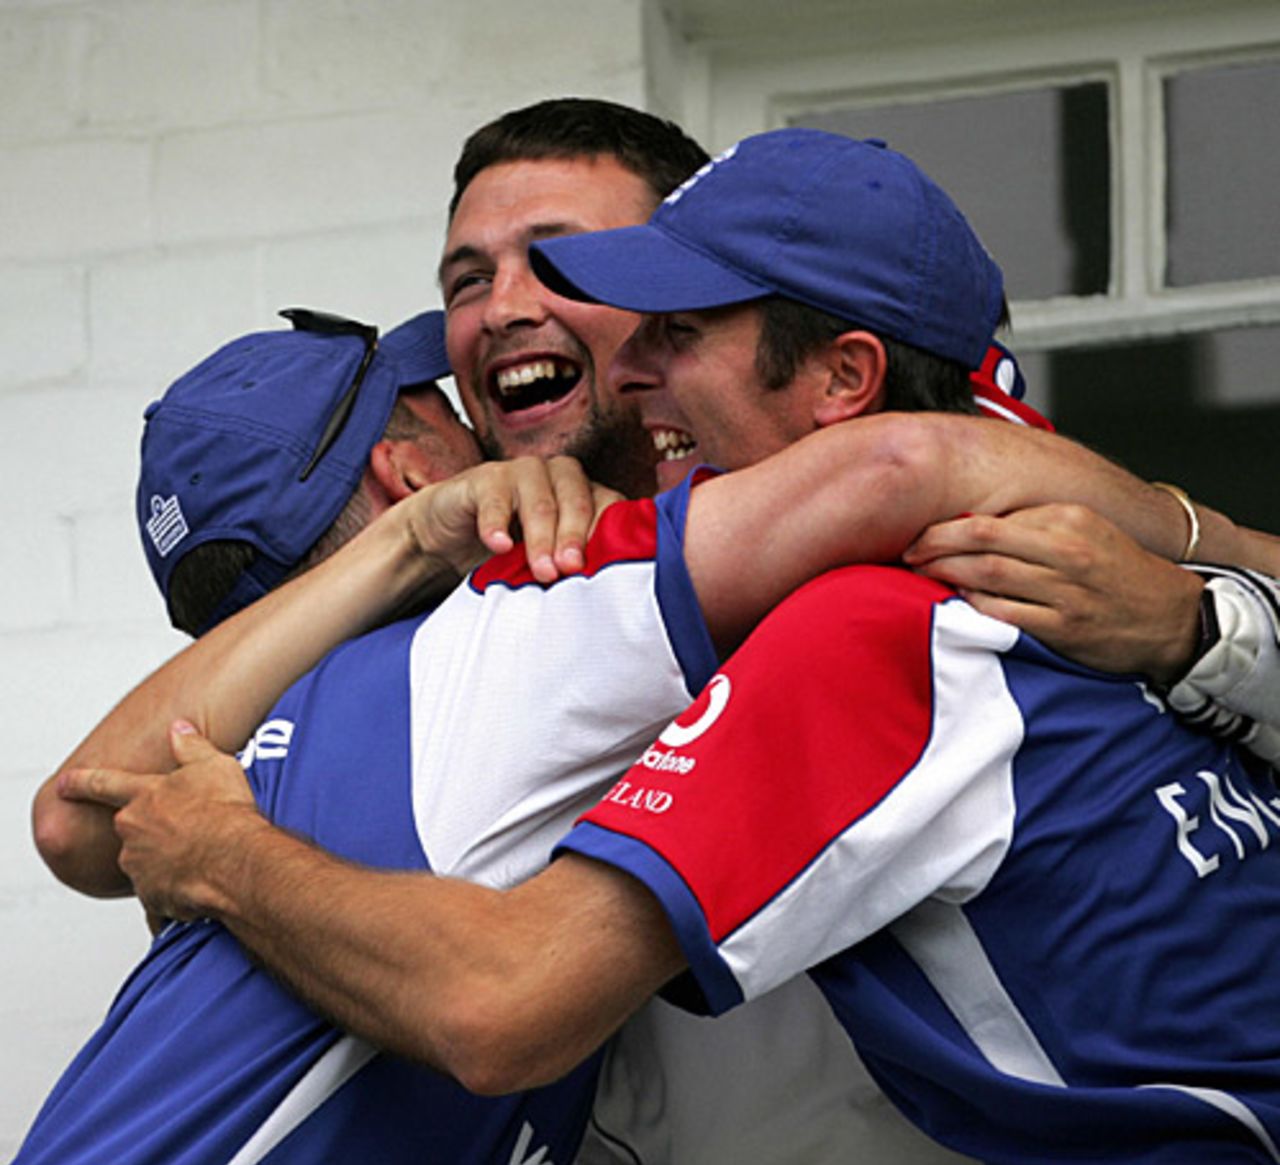 Steve Harmison and Michael Vaughan are ecstatic at beating Australia, England v Australia, Trent Bridge, August 28, 2005